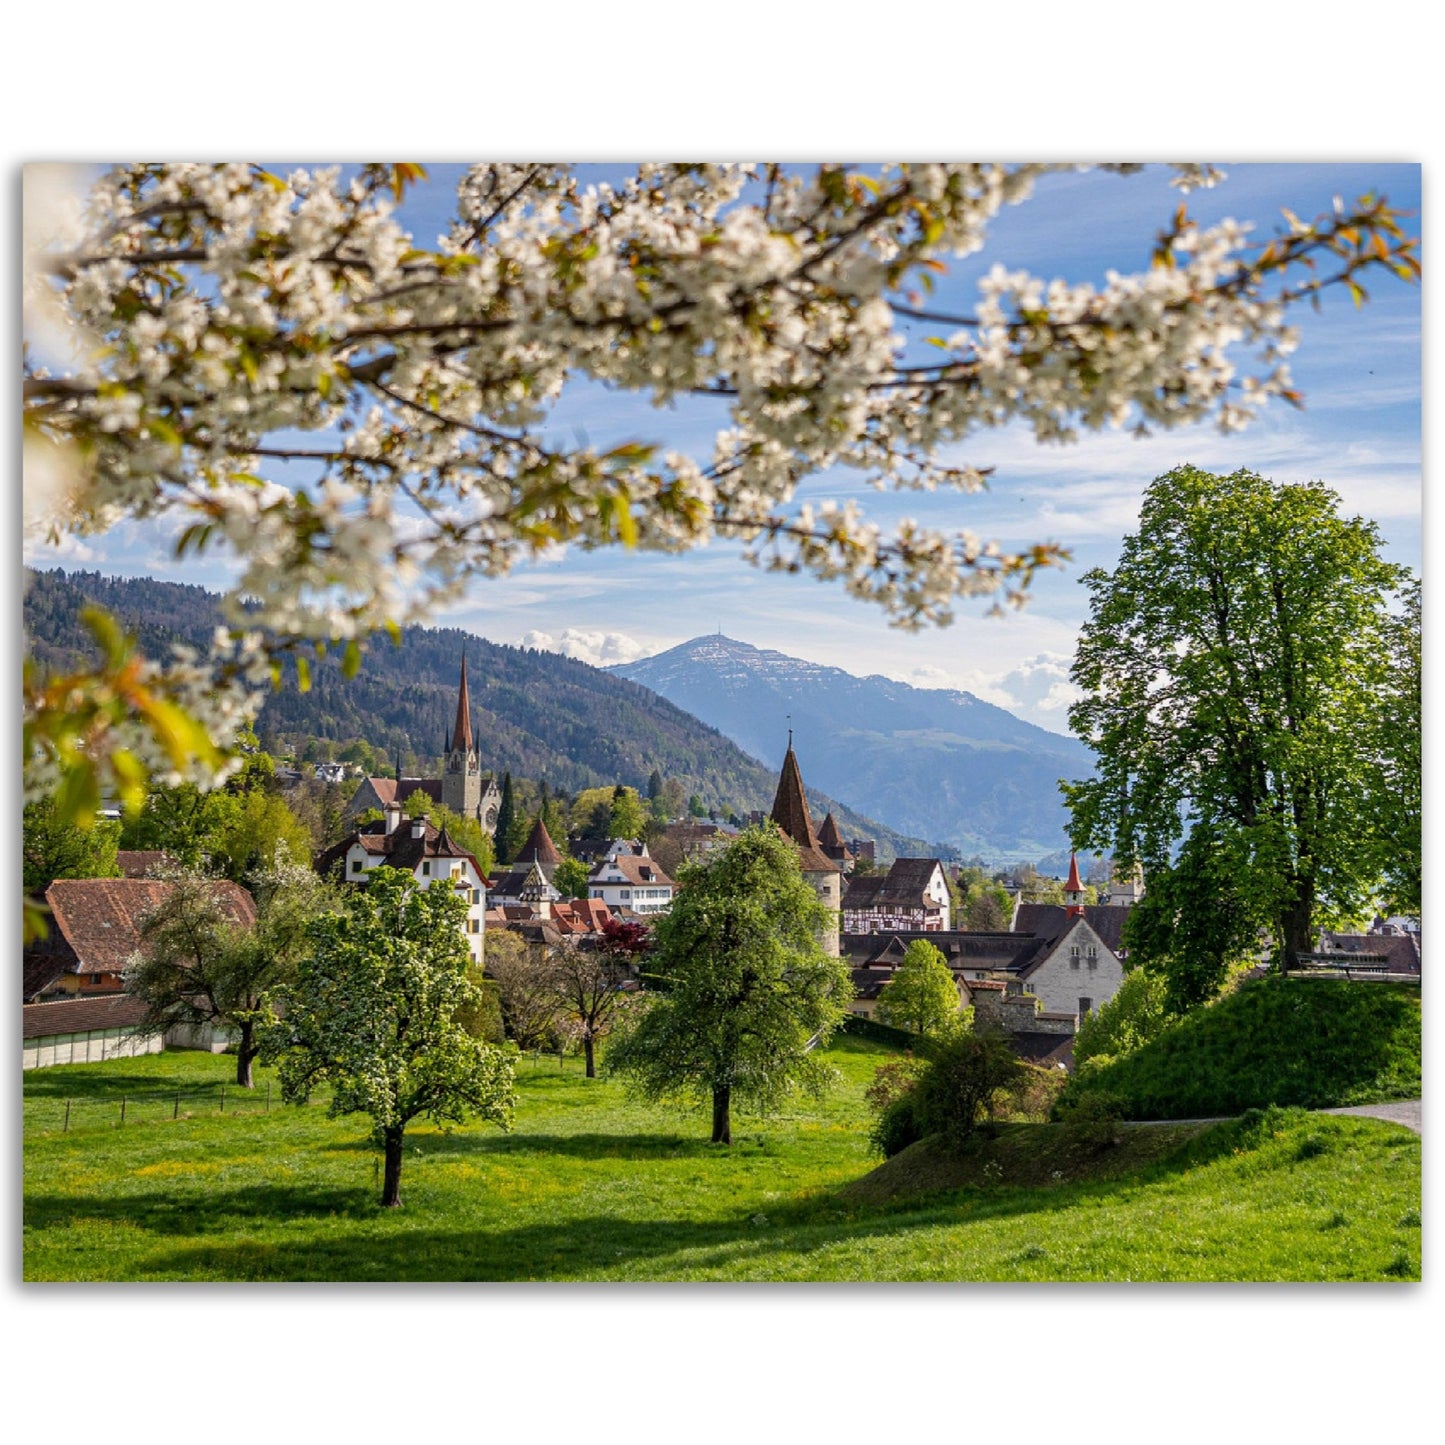 Frühlingszauber Stadt Zug - Premium Poster